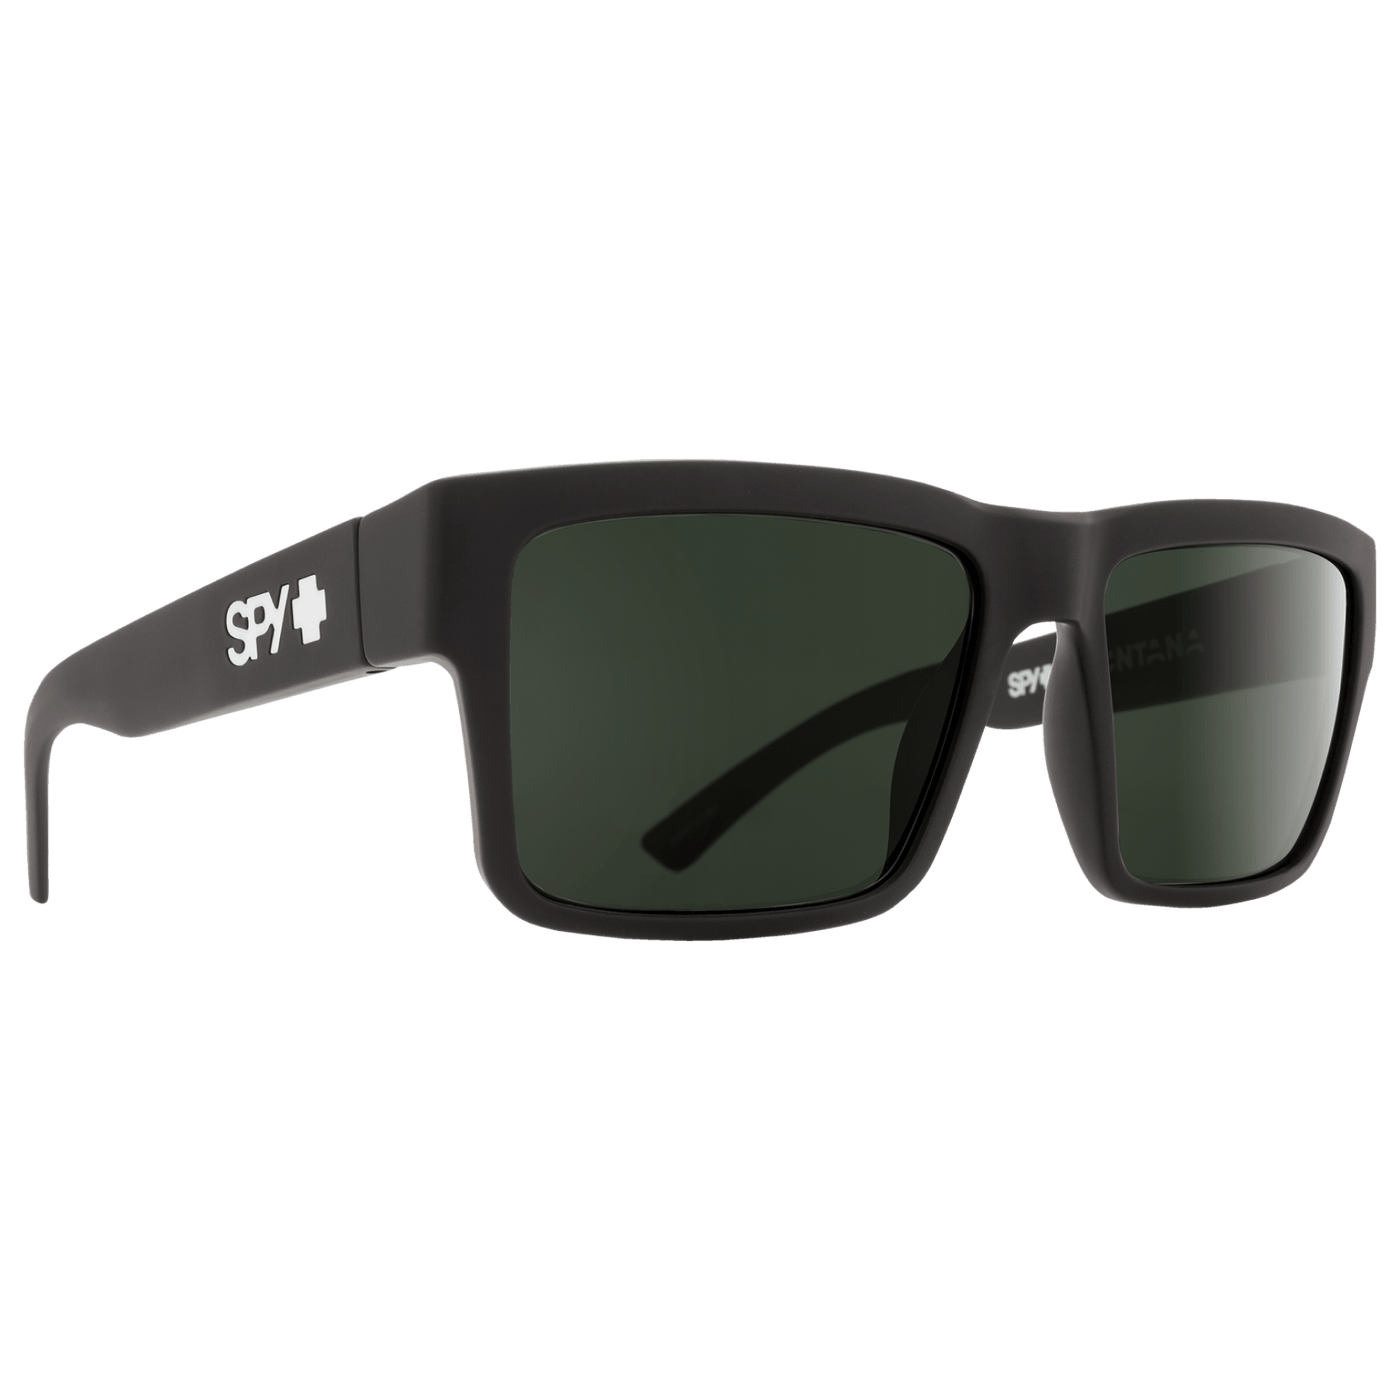 SPY MONTANA Sunglasses, Happy Lens - Gray/Green 8Lines Shop - Fast Shipping